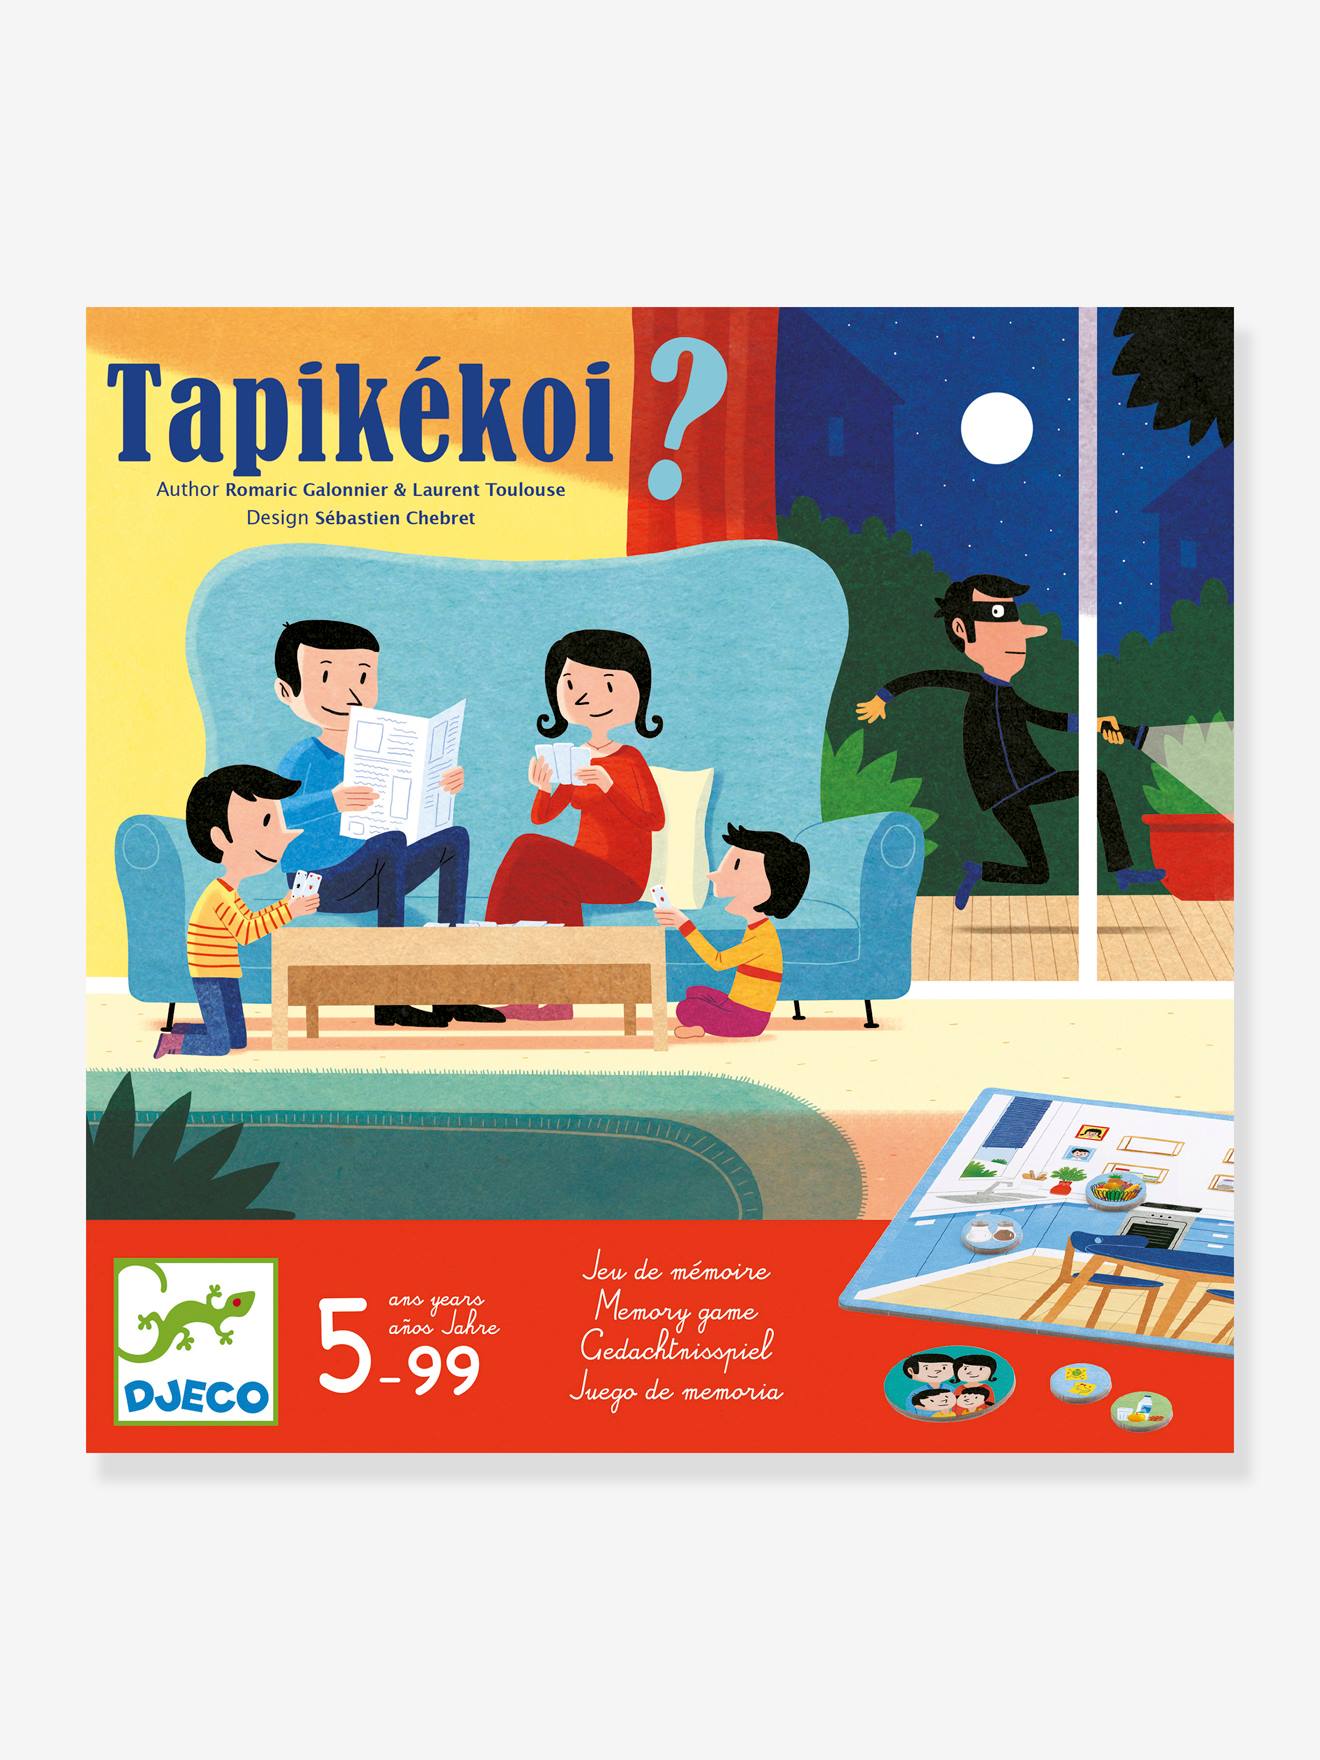 Tapikekoi Memory Game, by DJECO red